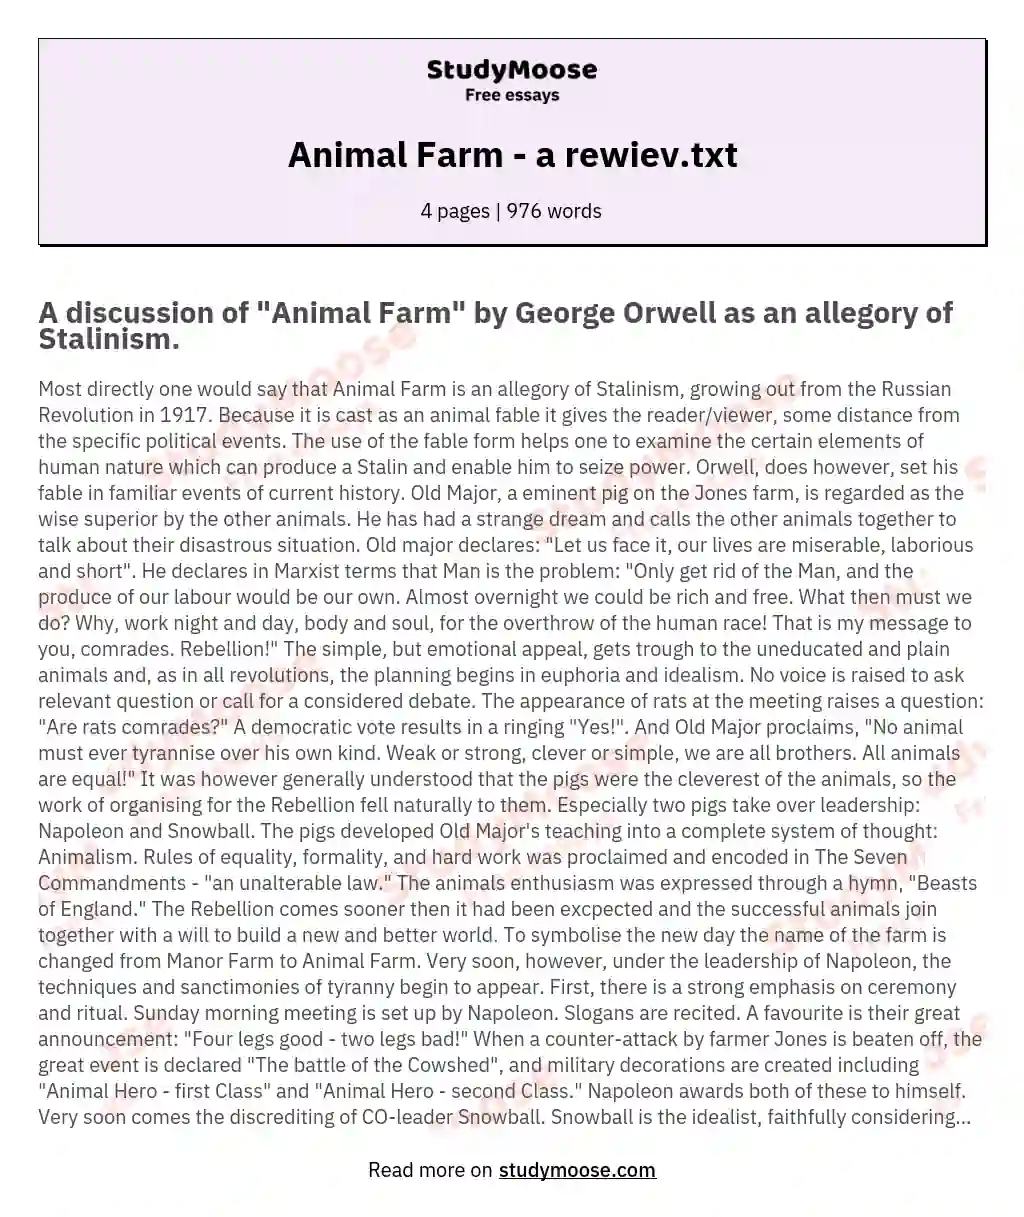 Animal Farm - a rewiev.txt